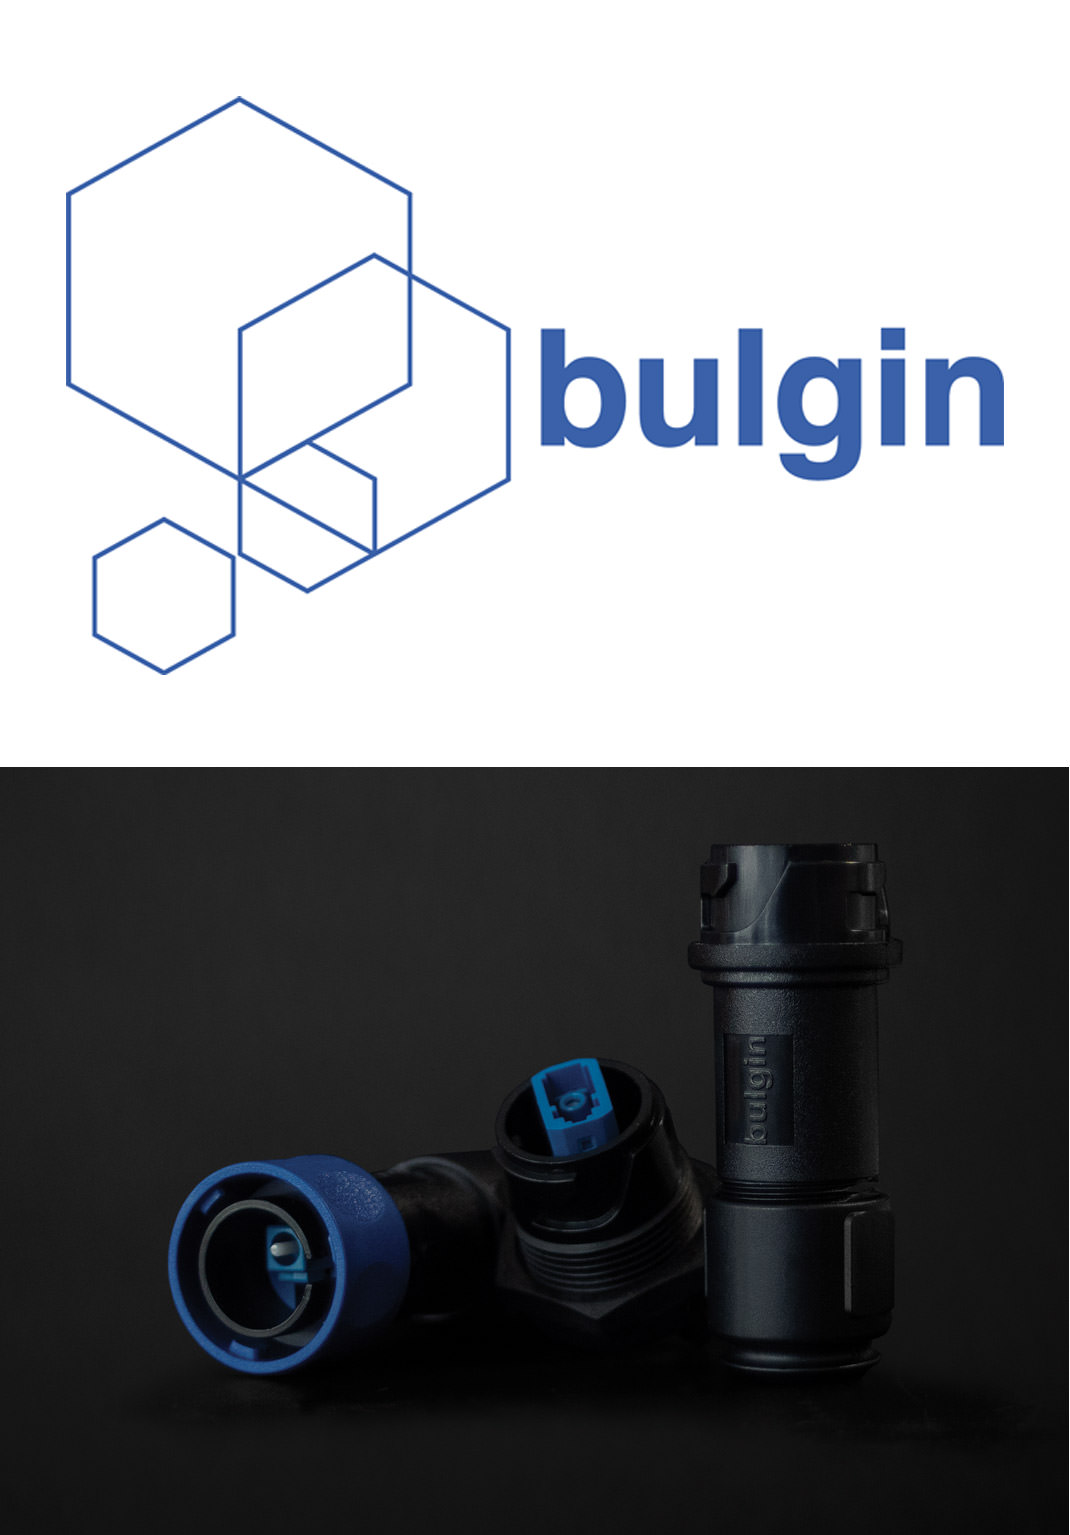 Bulgin logo and image